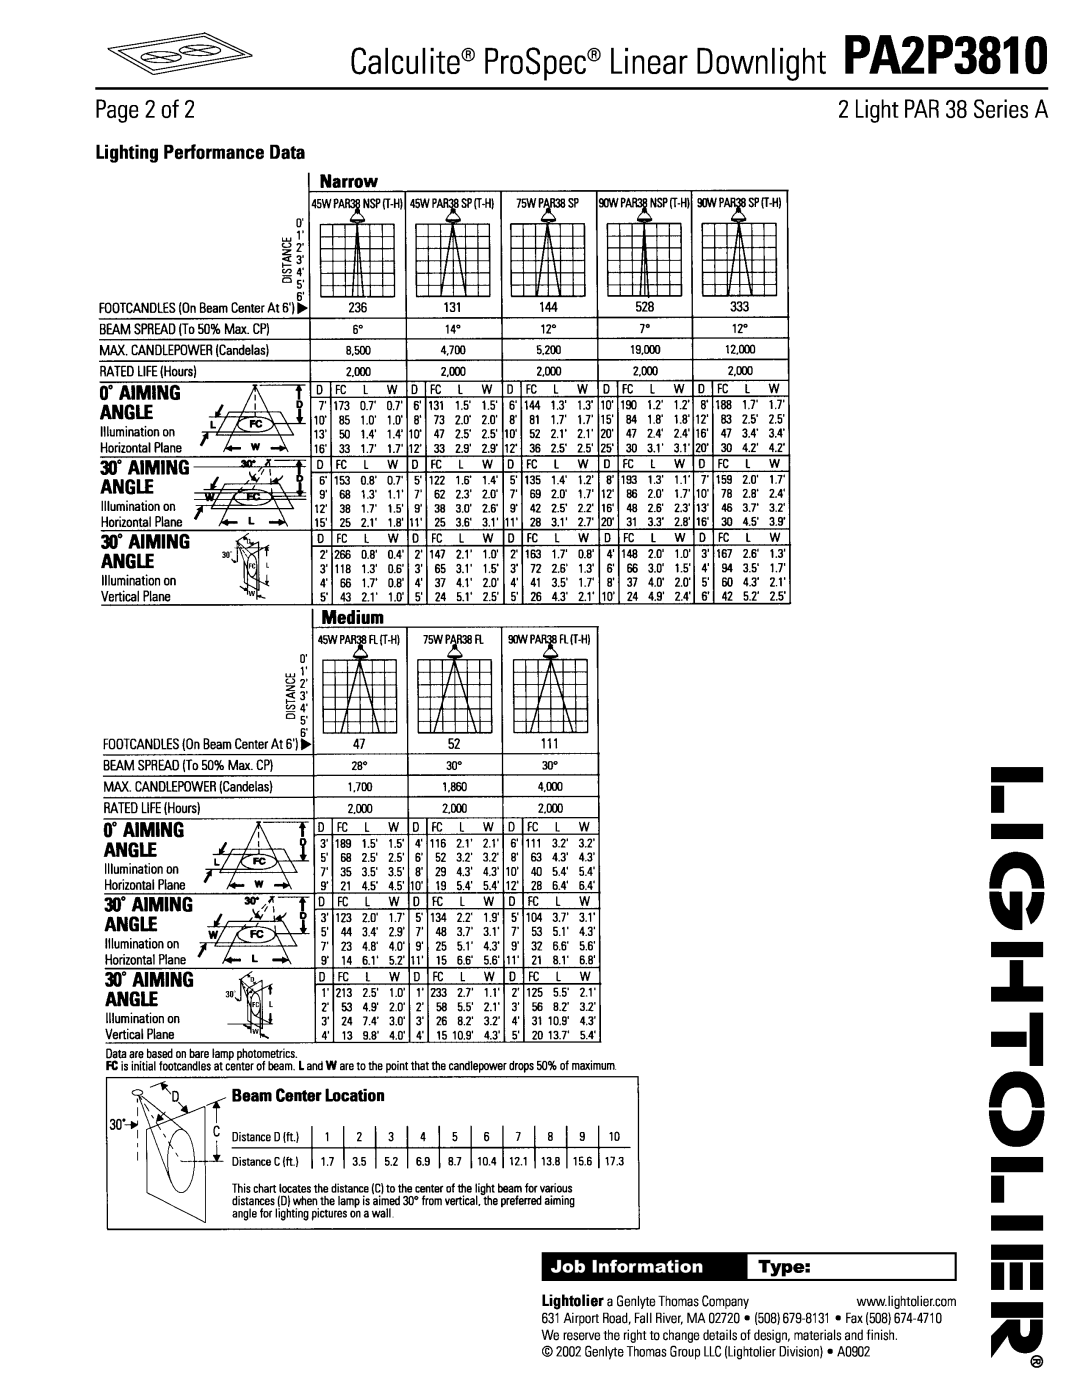 Lightolier Page 2 of, Lighting Performance Data, Calculite ProSpec Linear Downlight PA2P3810, Light PAR 38 Series A 